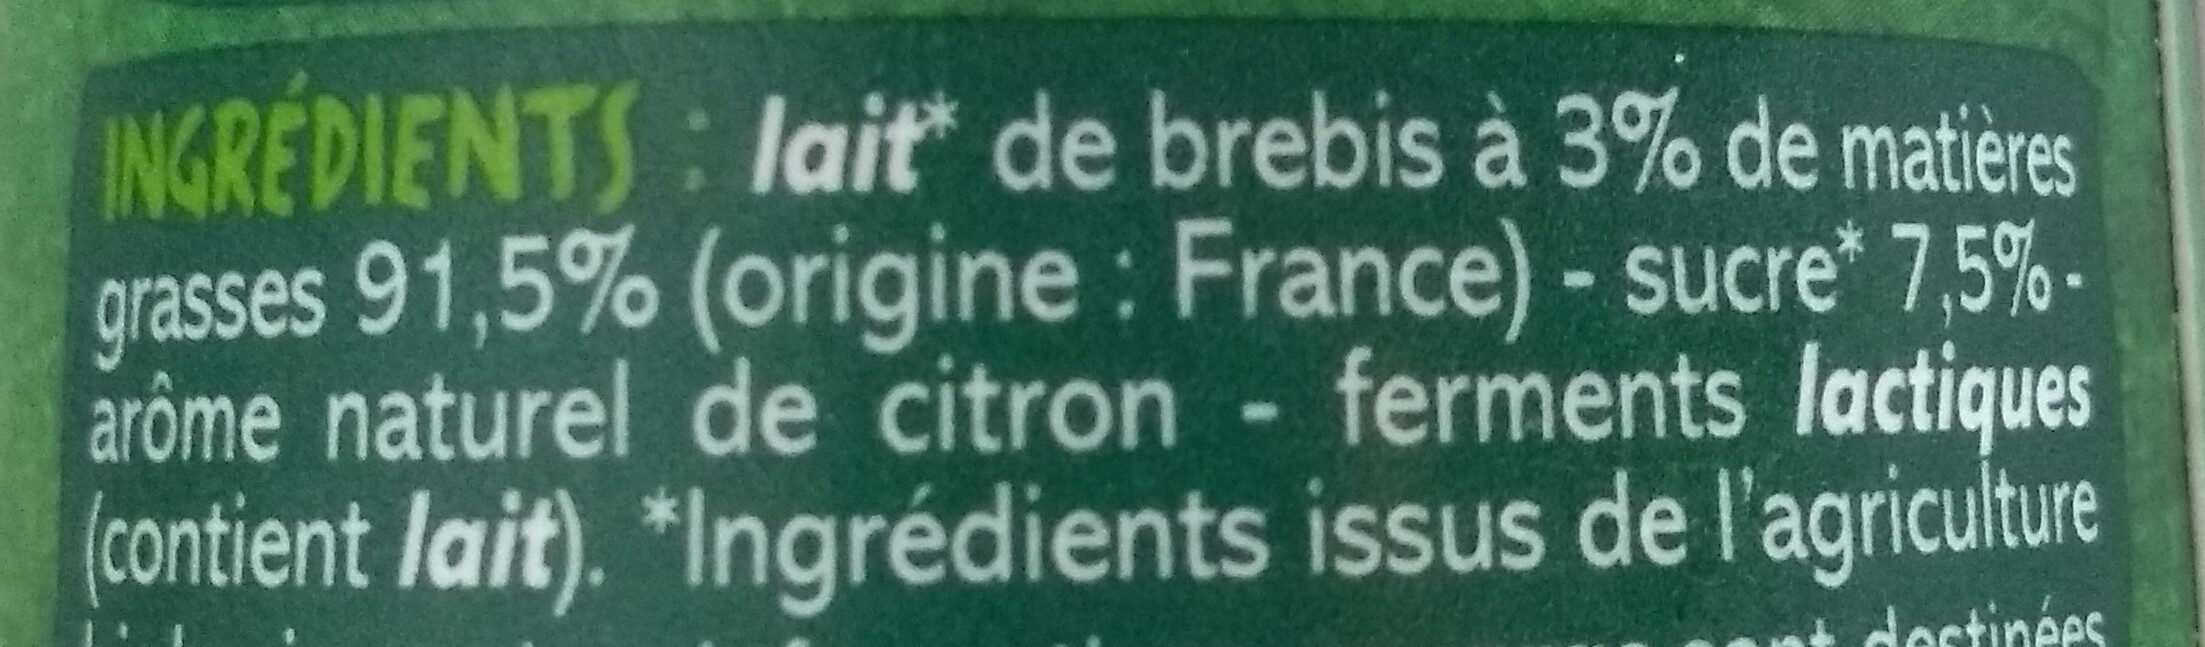 Yaourt de brebis à l'arôme naturel de citron - Ingrediënten - fr